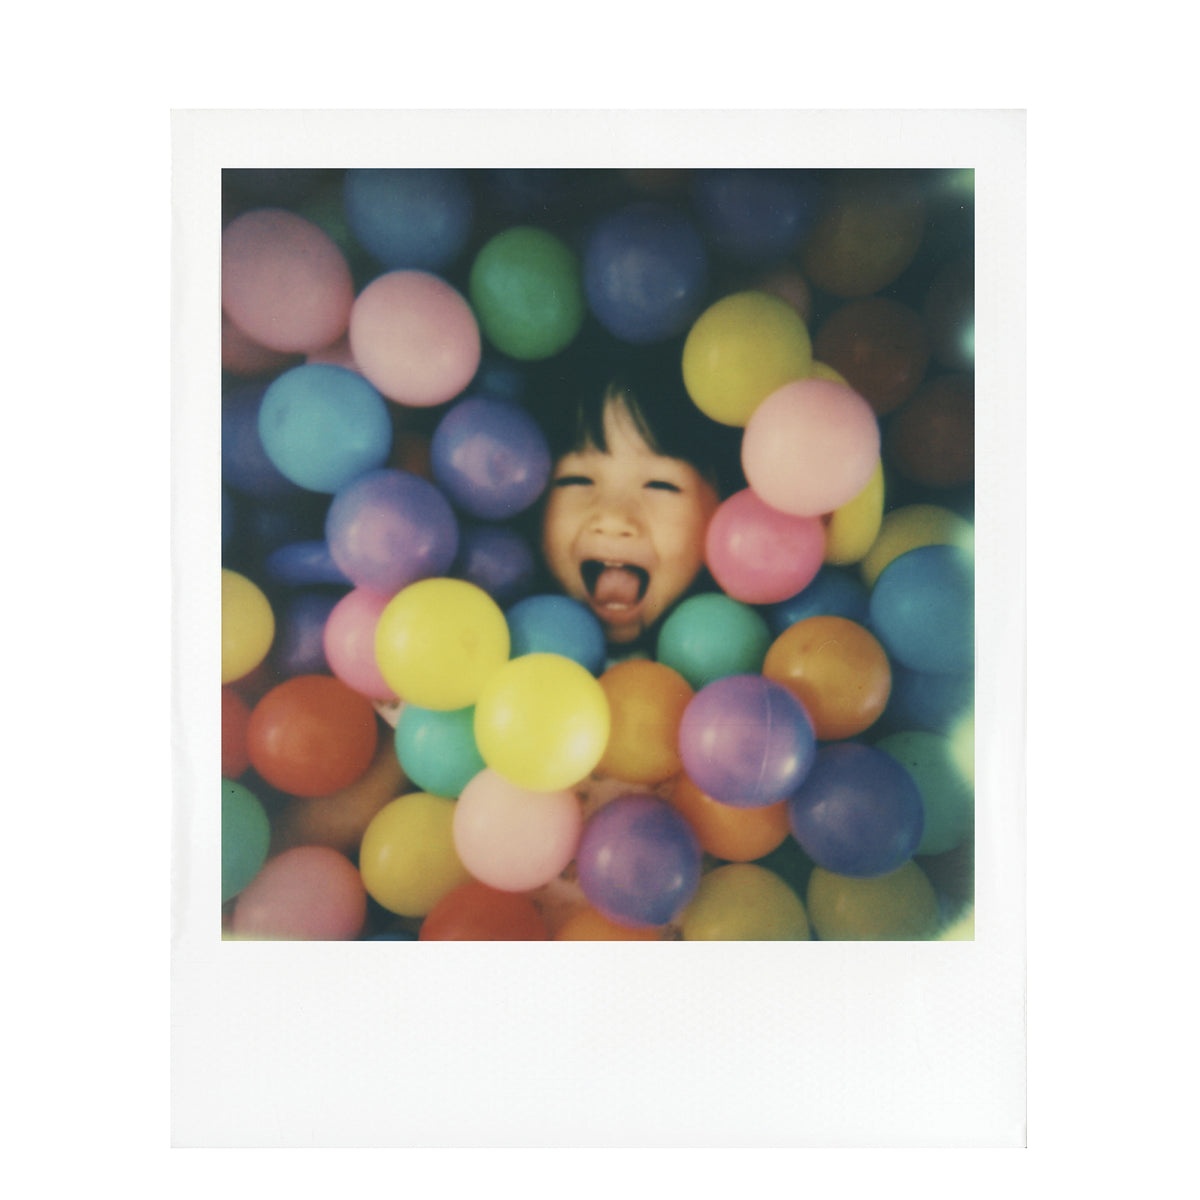 Polaroid Color Film for Polaroid 600-TYPE Cameras (8)